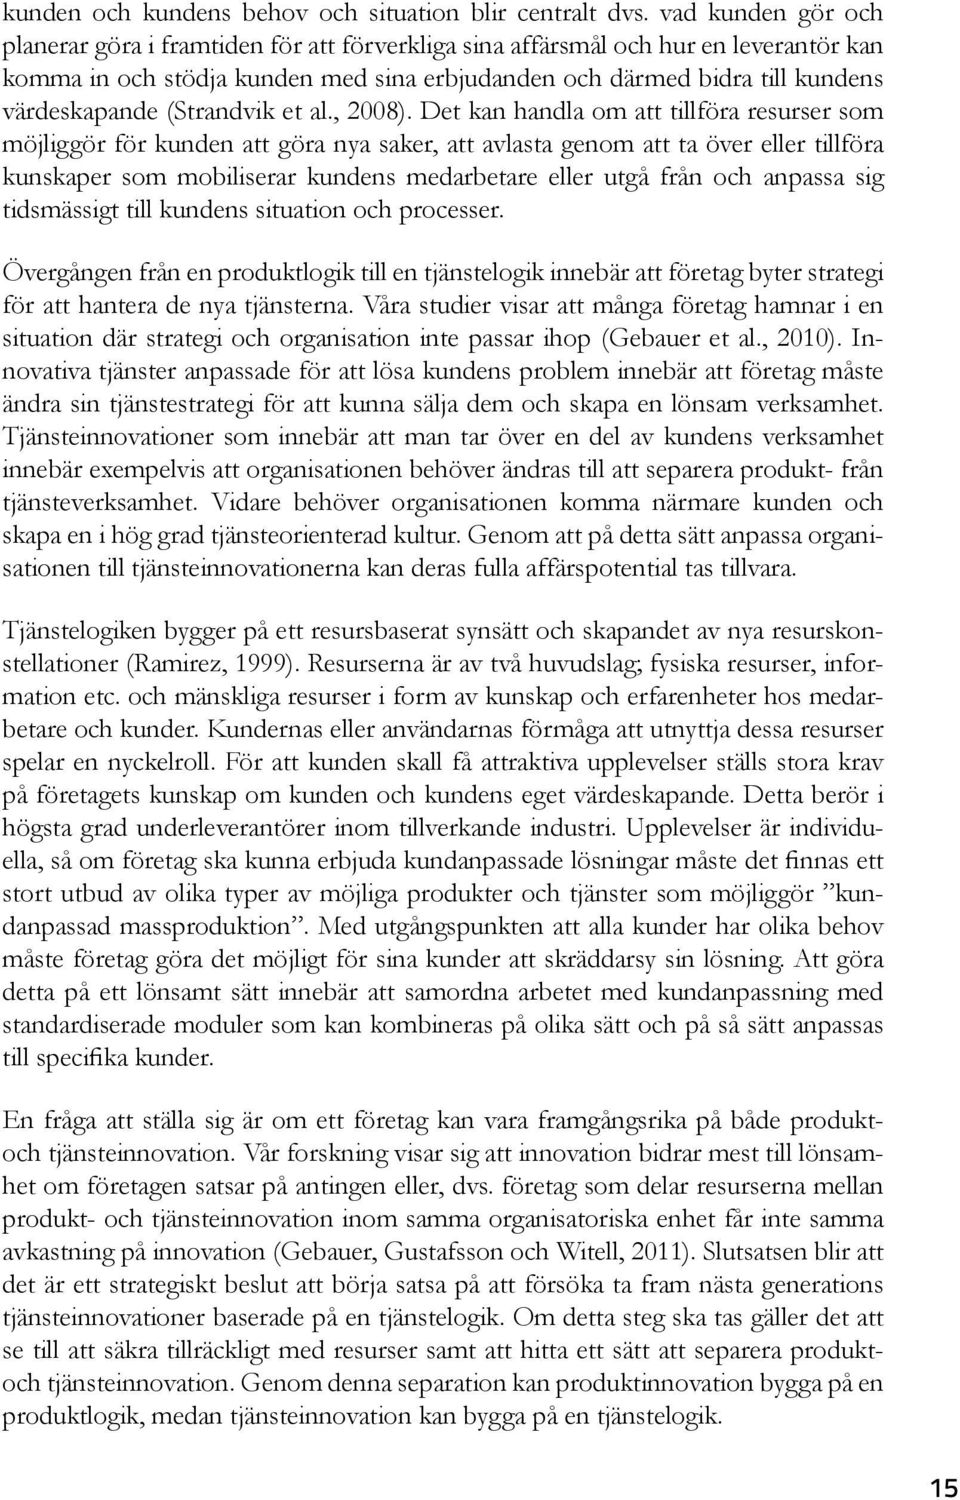 (Strandvik et al., 2008).